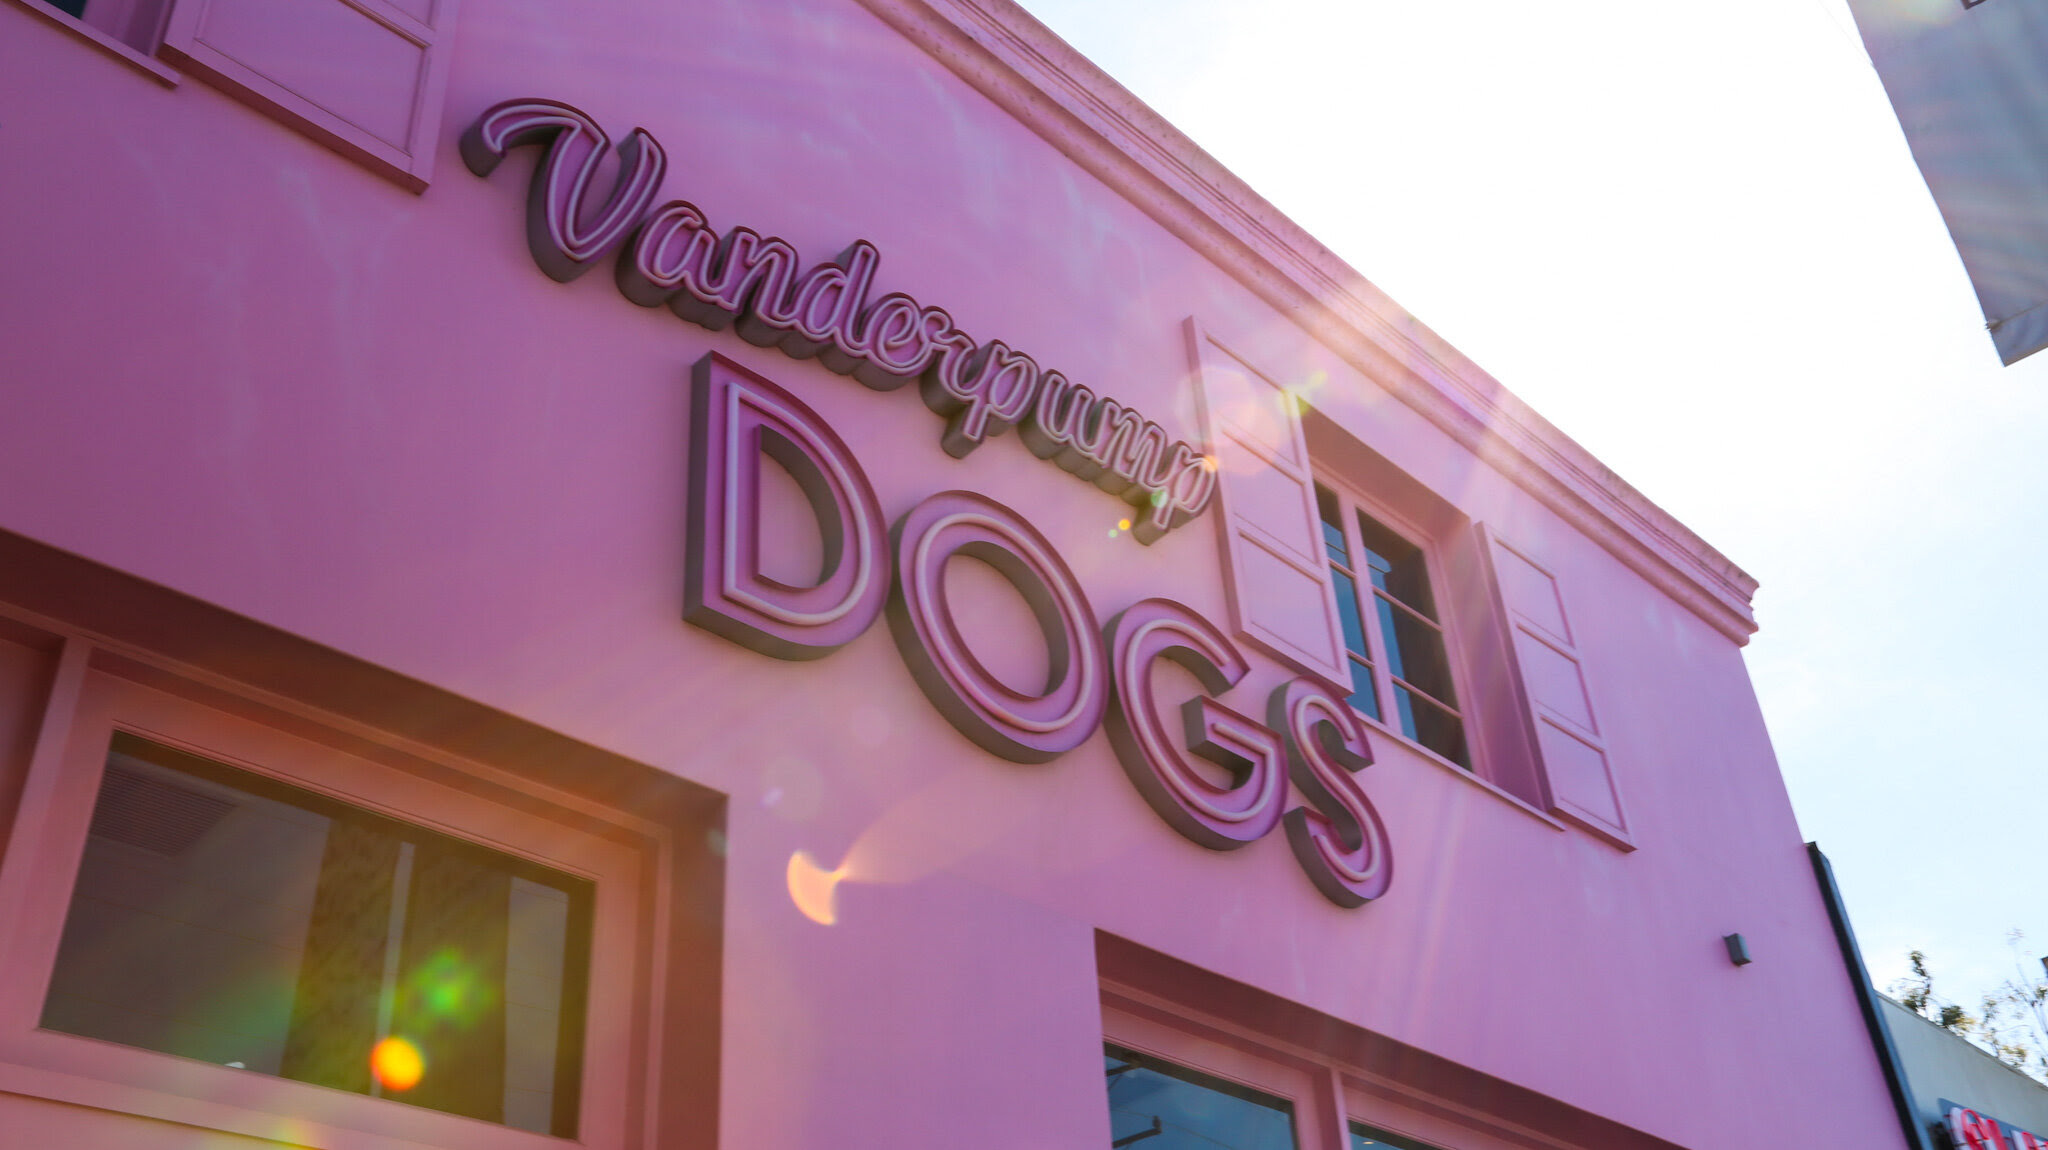 A photo of the Vanderpump Dog Foundation